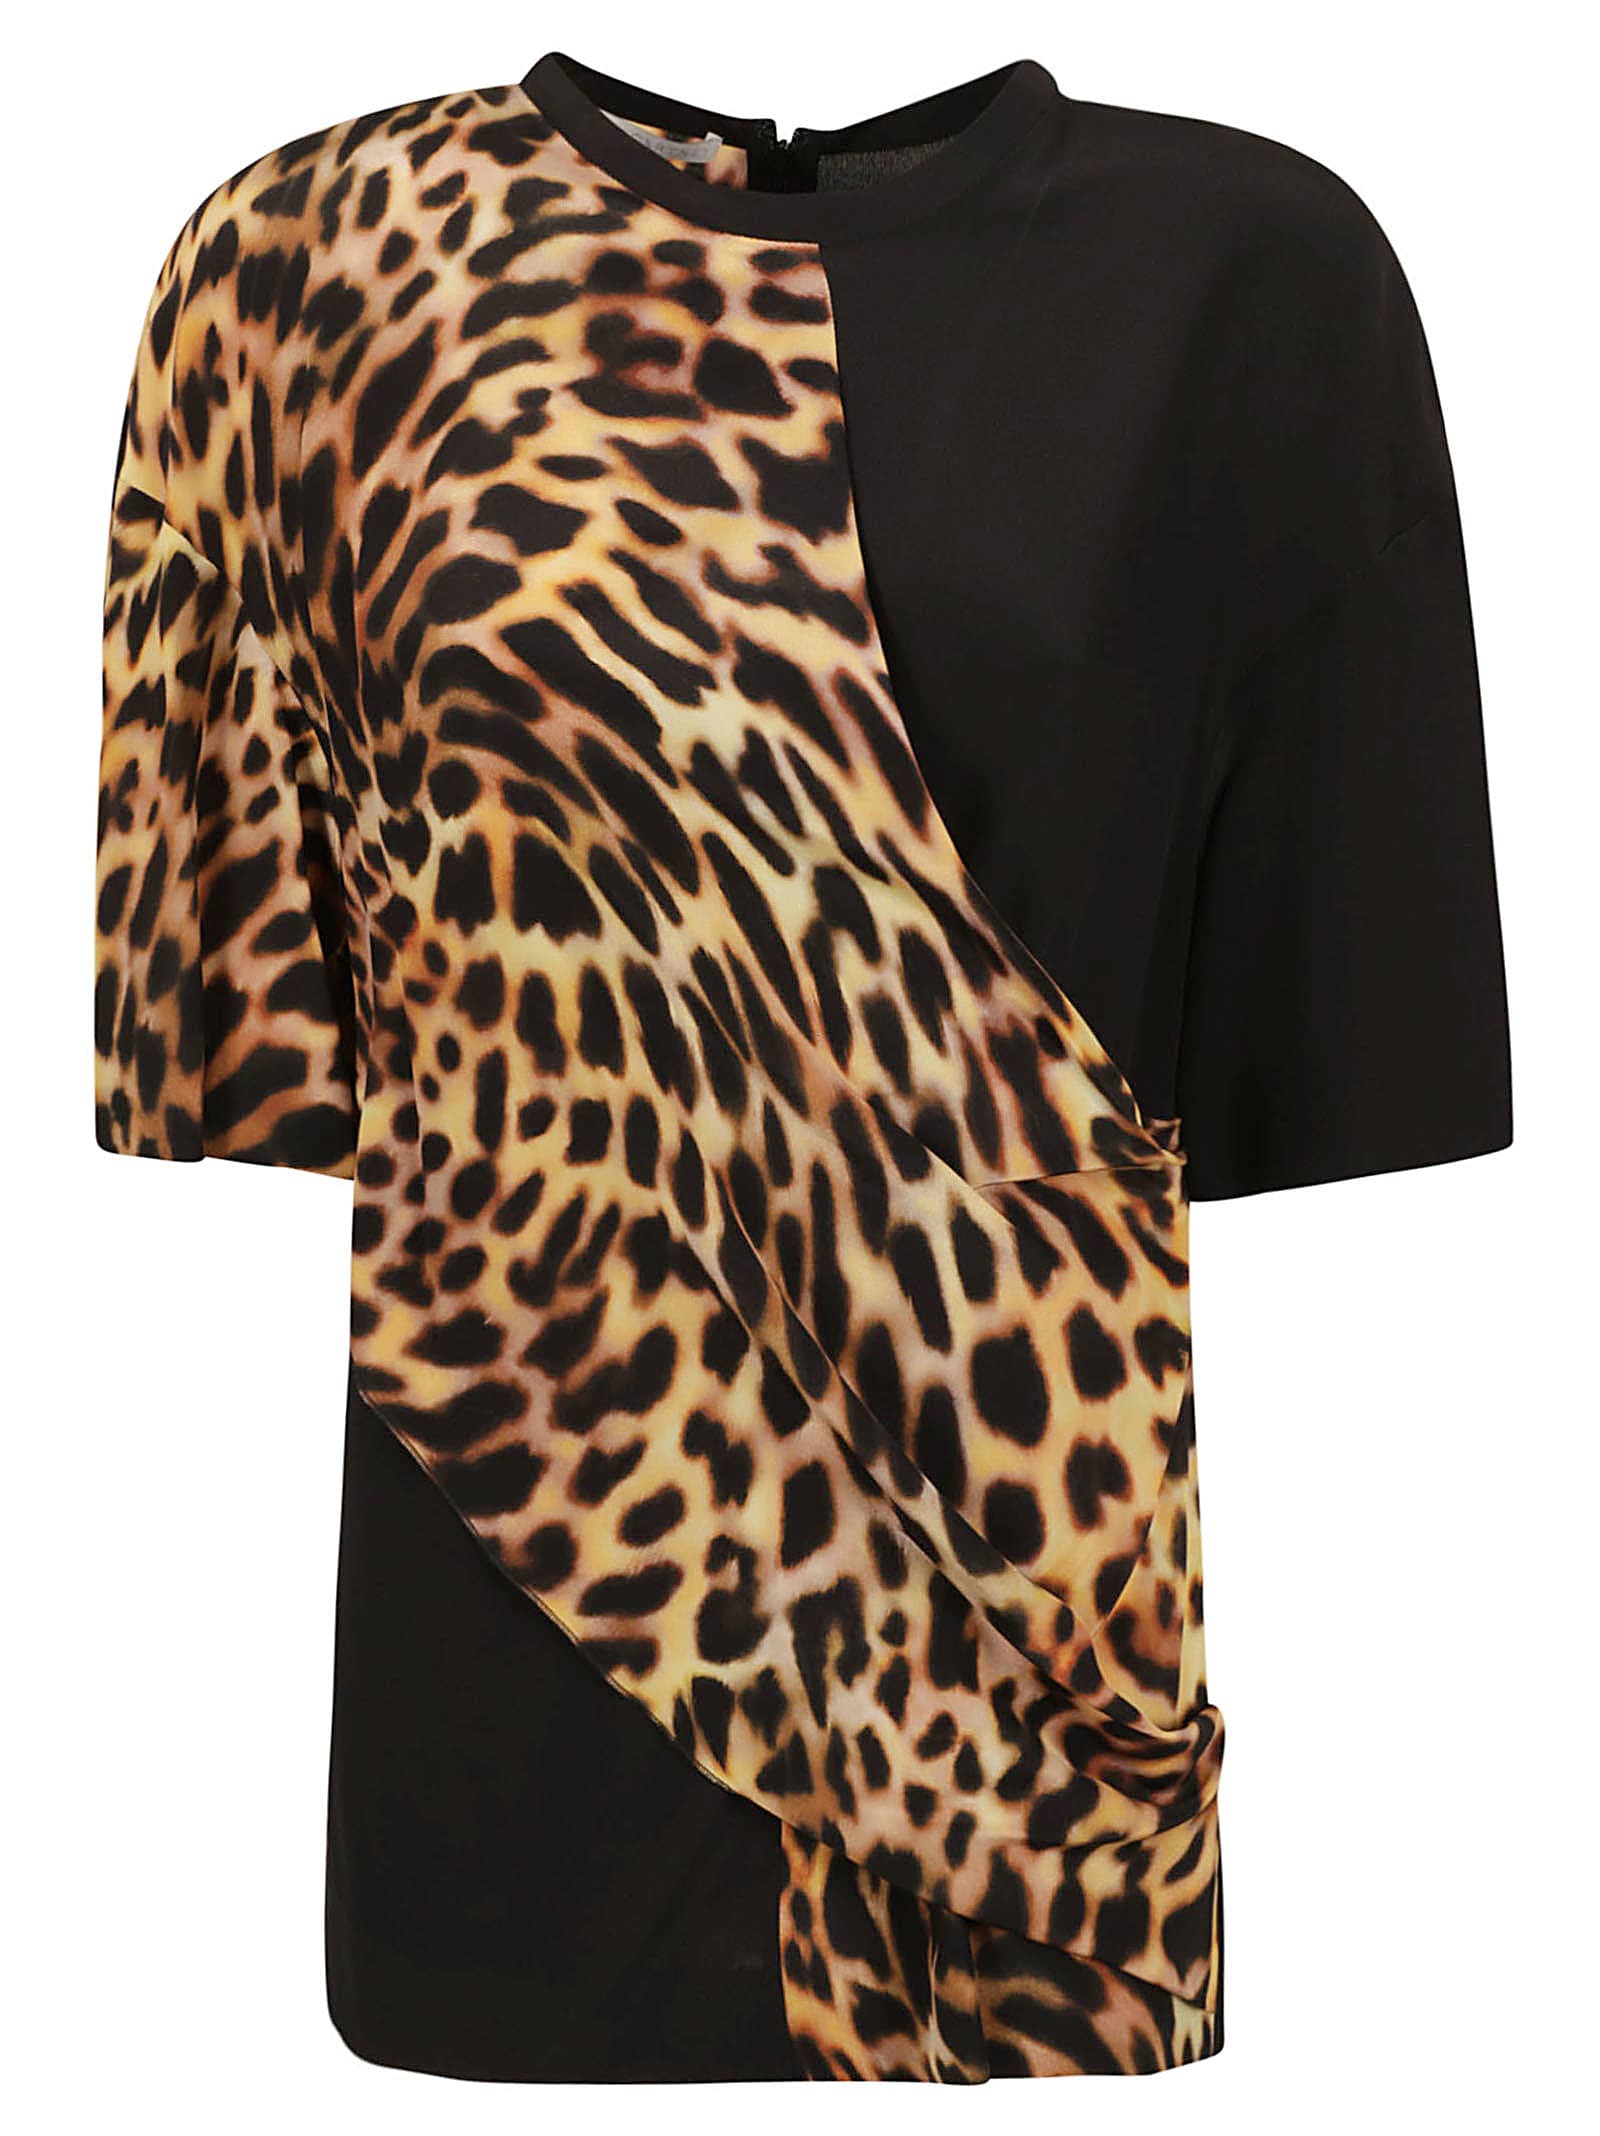 Stella McCartney Cheetah Print Silk Top